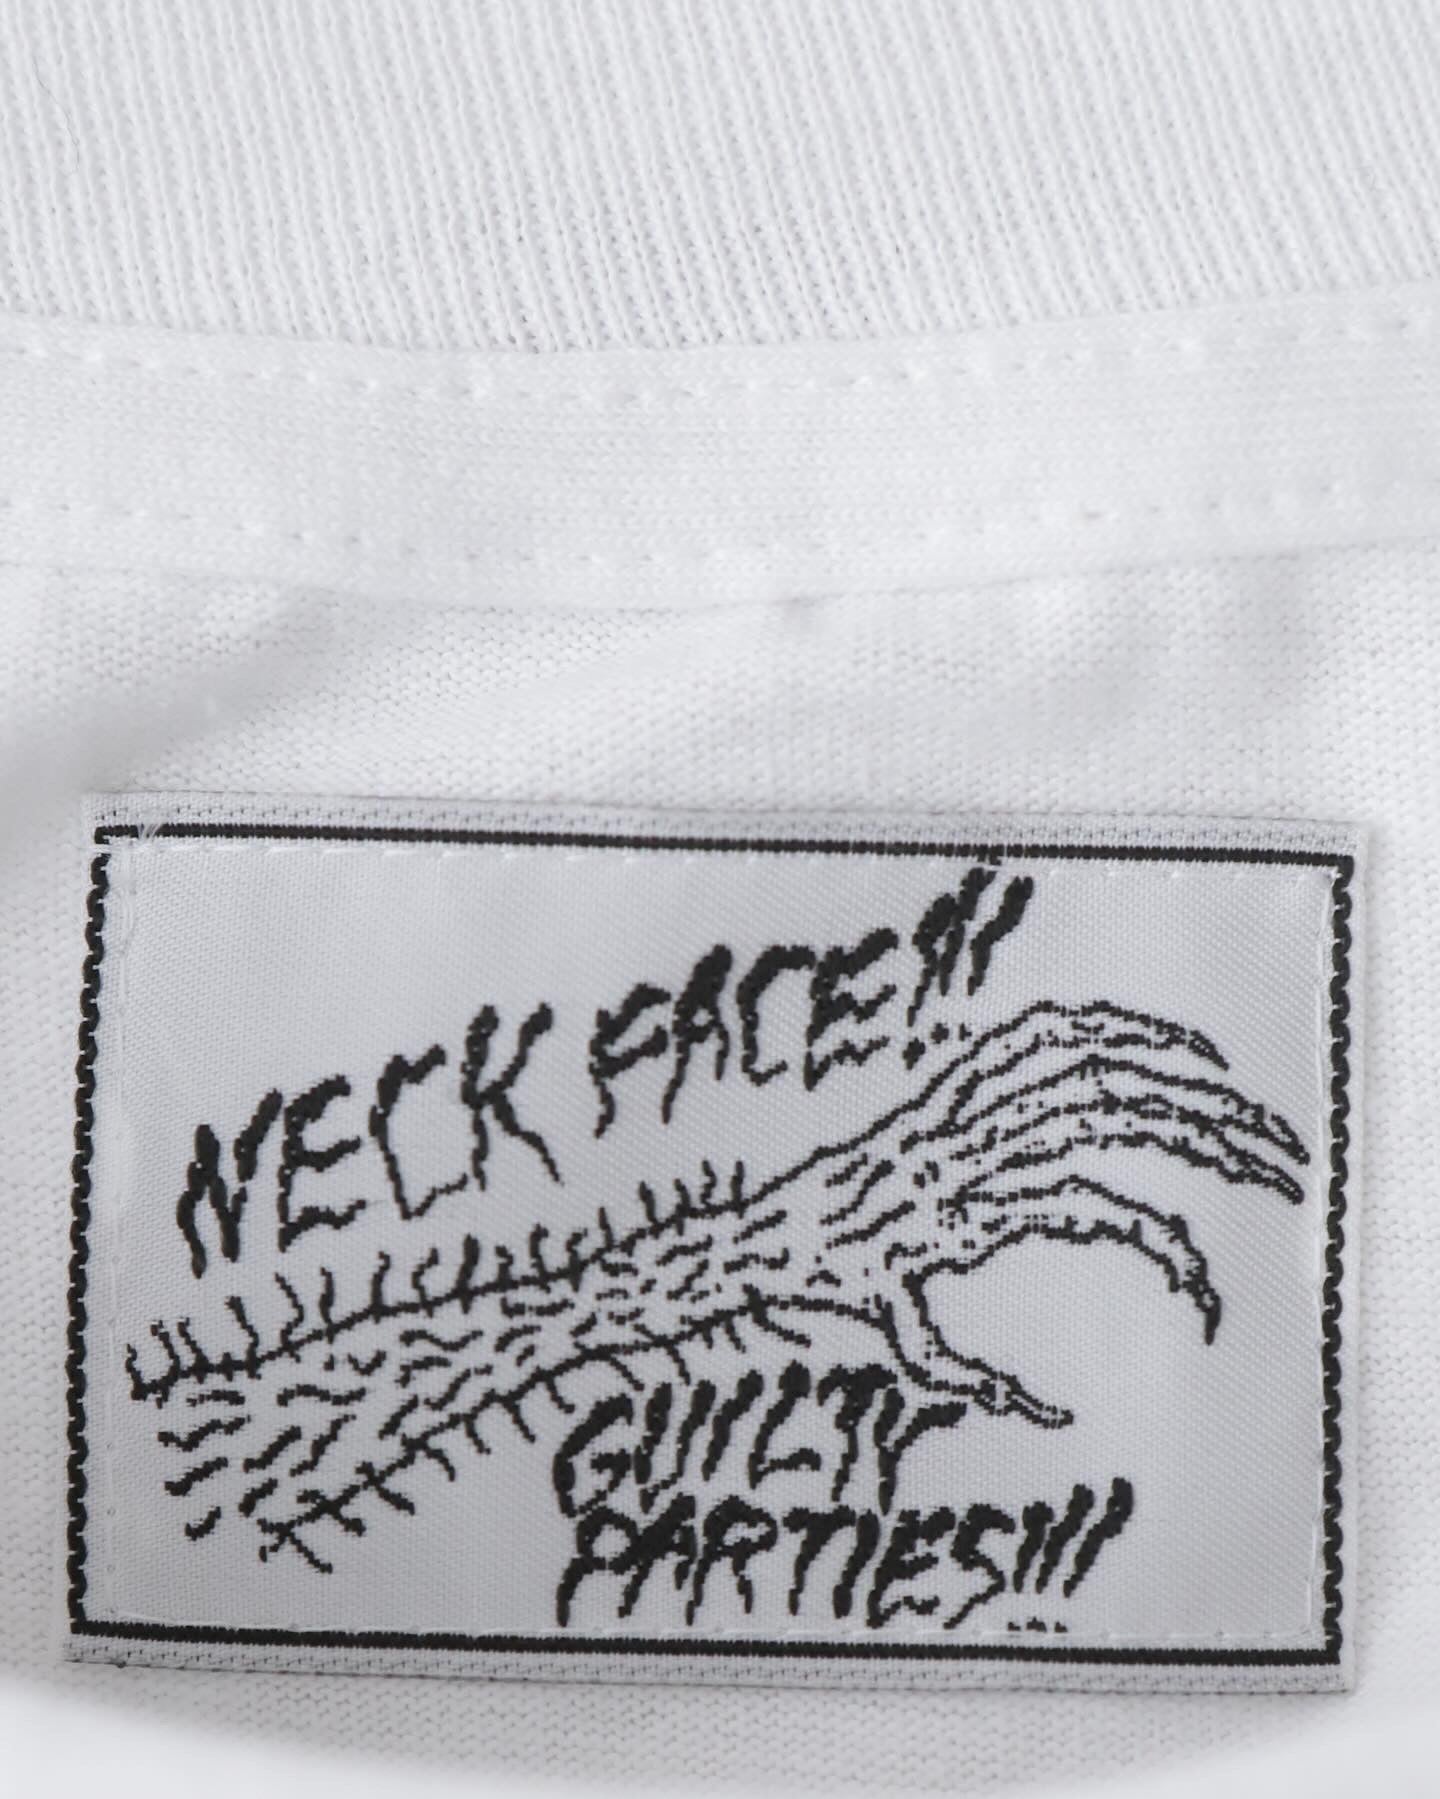 NECK FACE / CREW NECK T-SHIRT（TYPE-4）